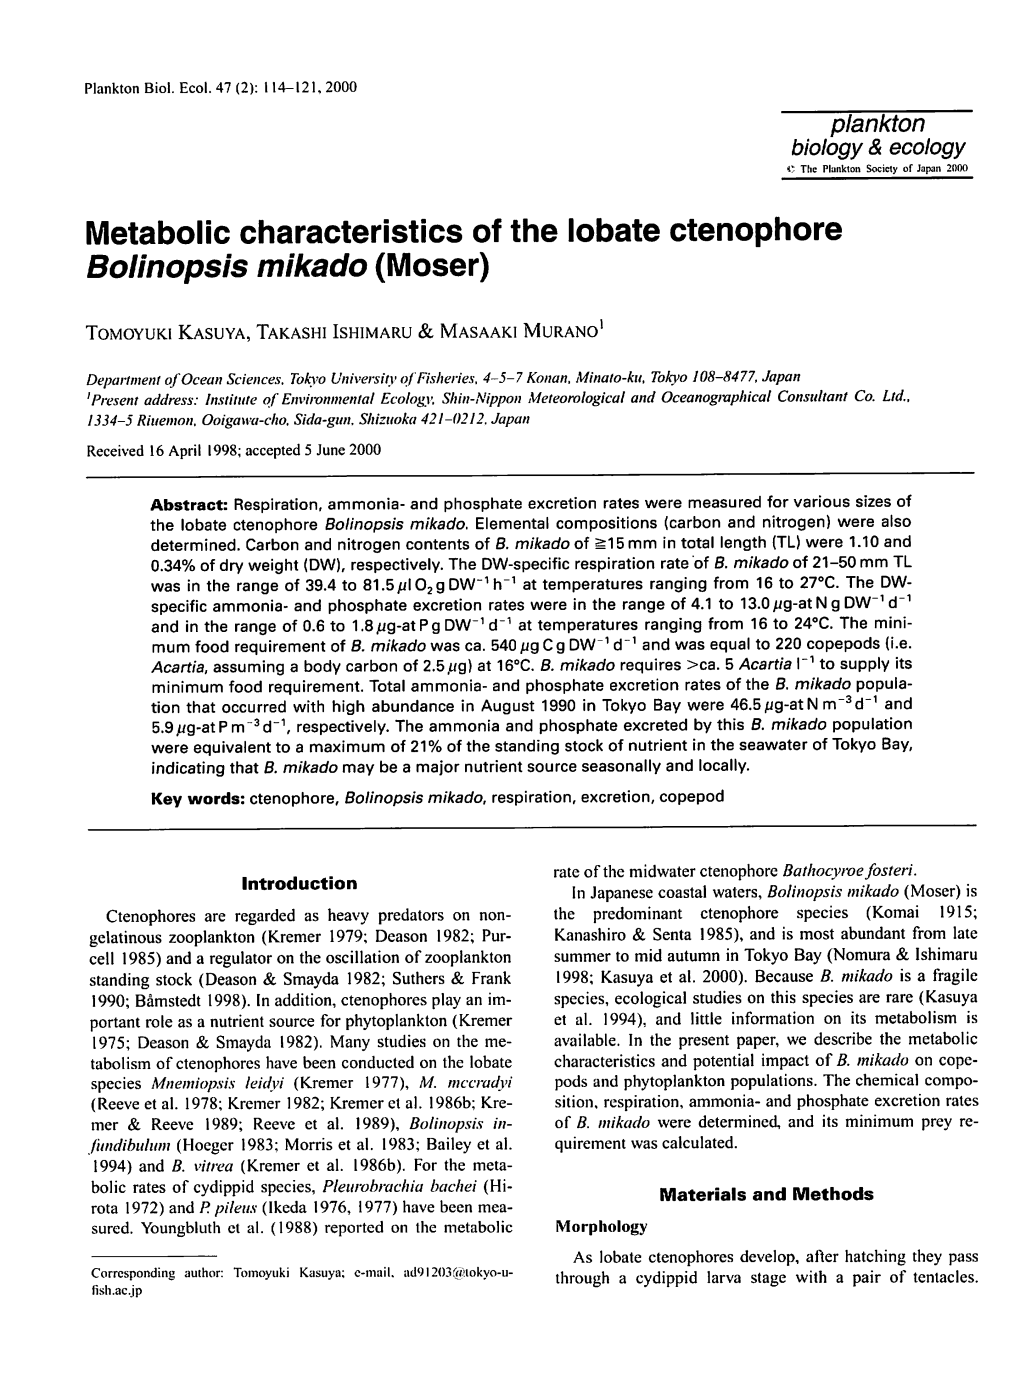 Metabolic Characteristics of the Lobate Ctenophore Bolinopsis Mikado (Moser)